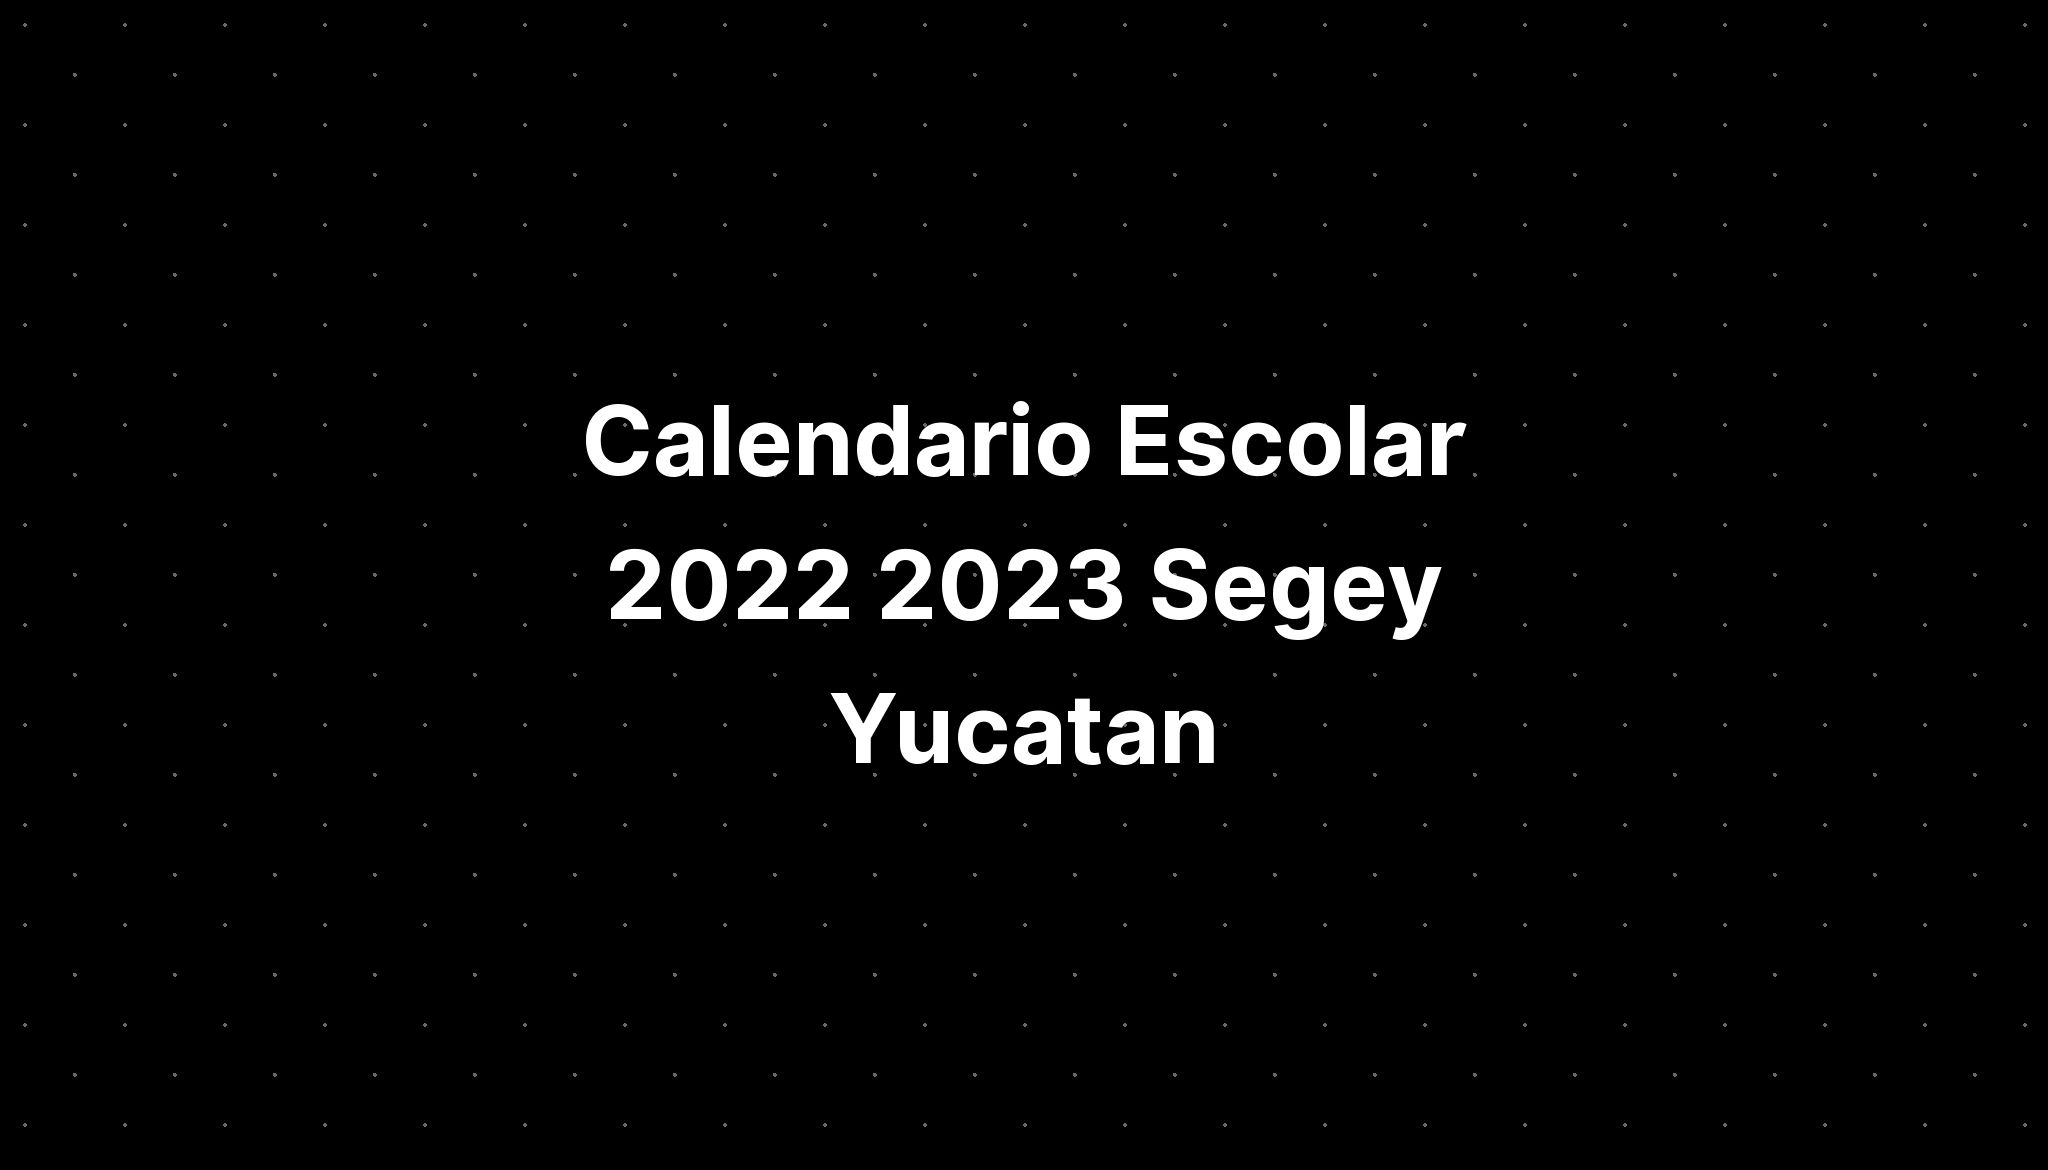 Calendario Escolar 2022 2023 Segey Yucatan Imagesee 9949